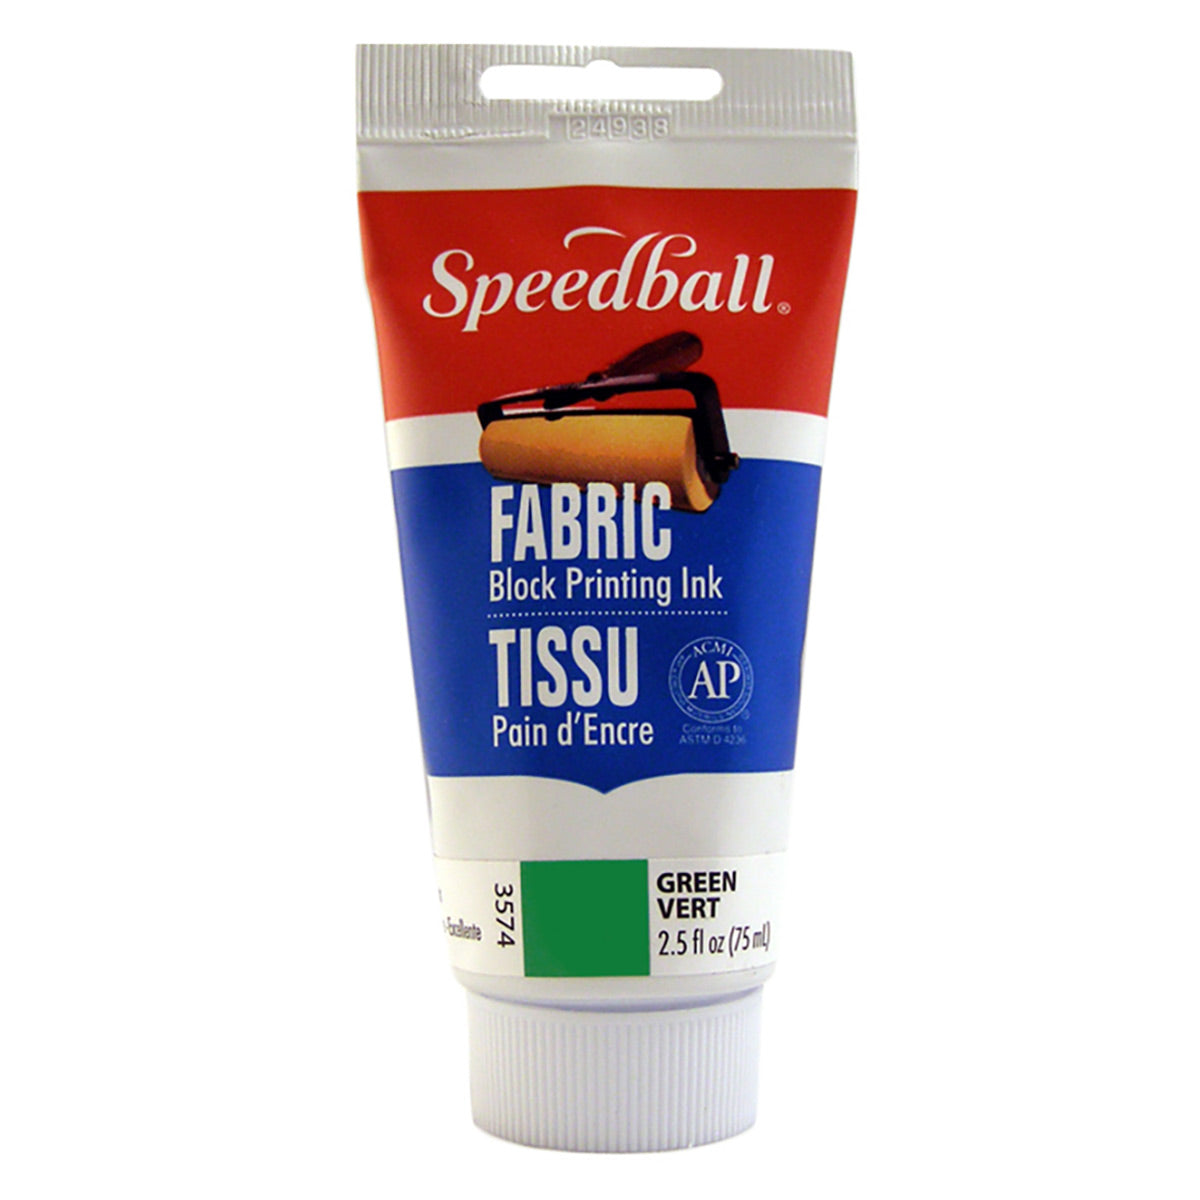 Speedball - Fabric Block Printing Ink 75ml (2.5oz) - Green